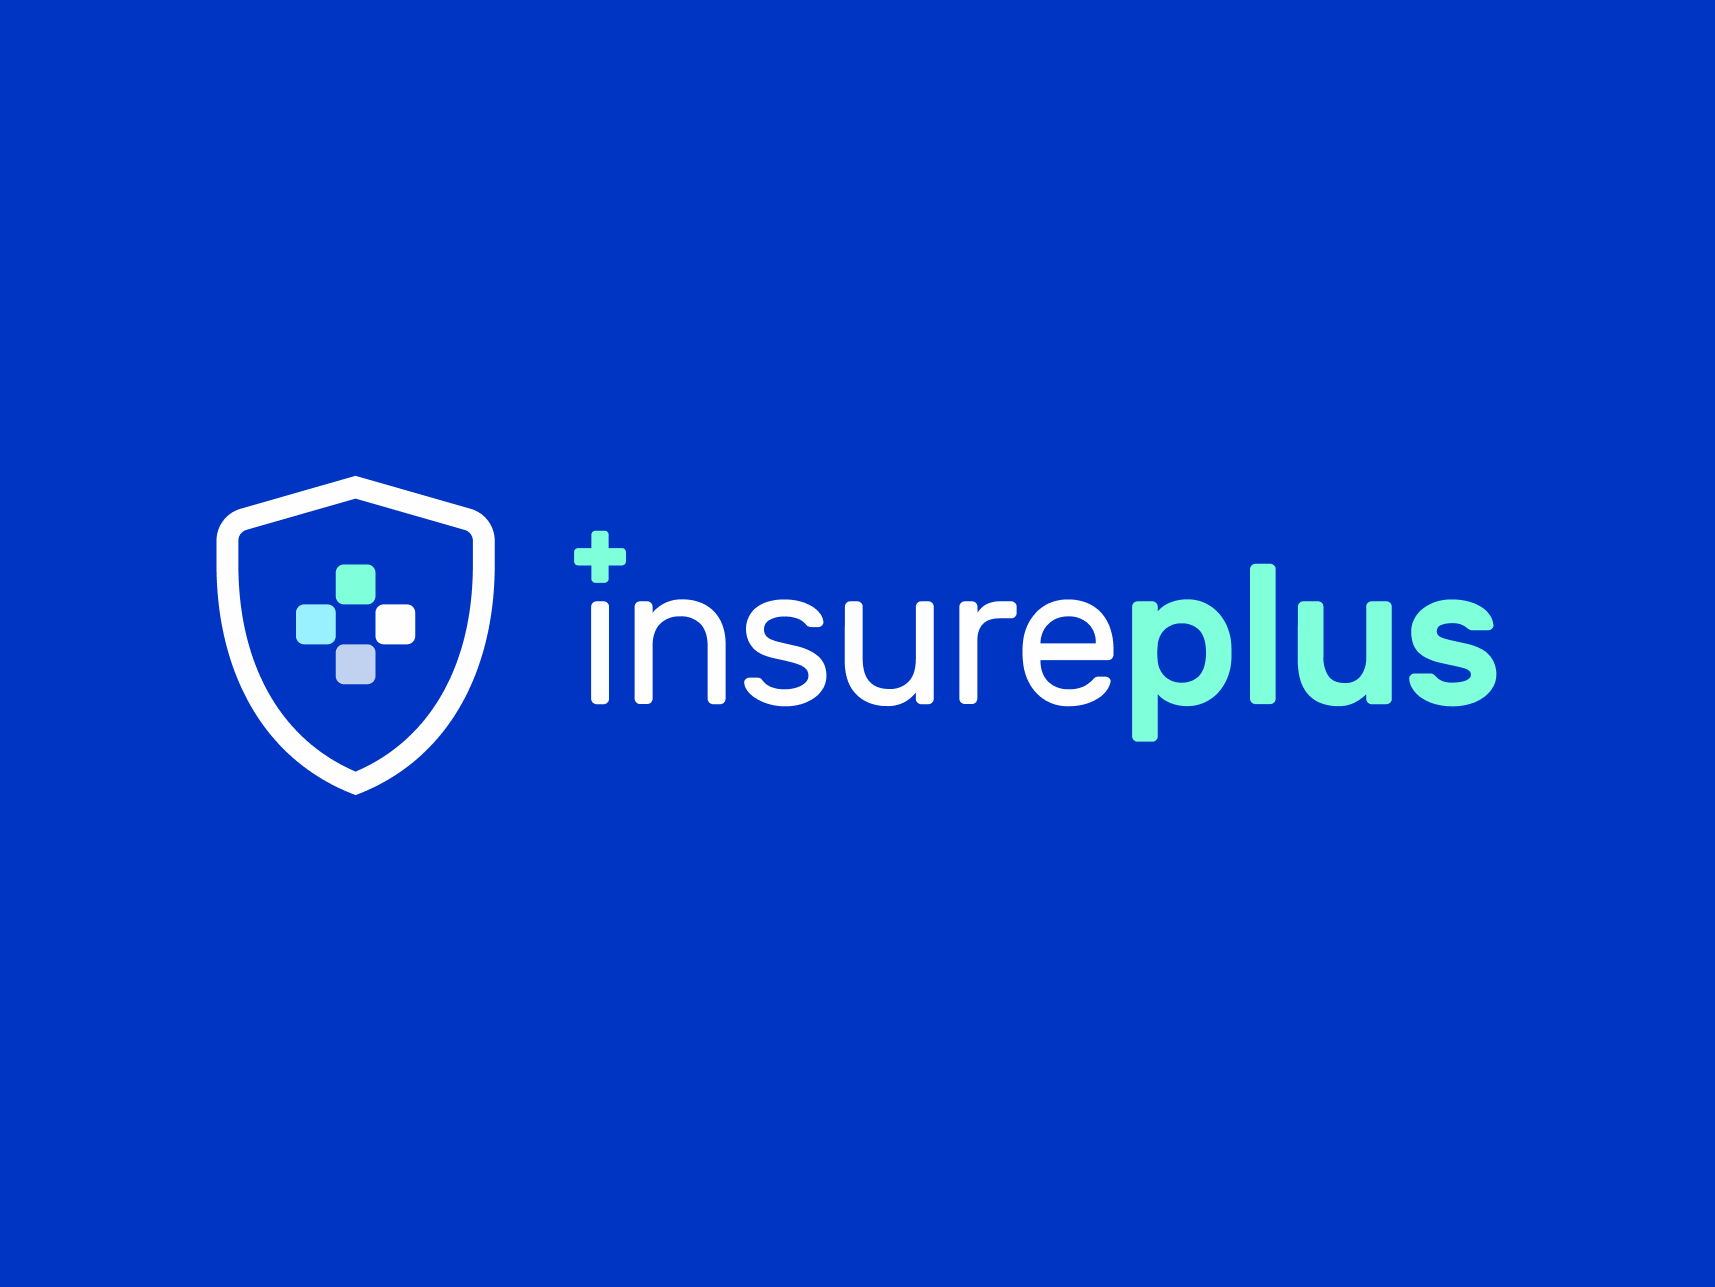 A white InsurePlus logo overlaid on a dark blue background.